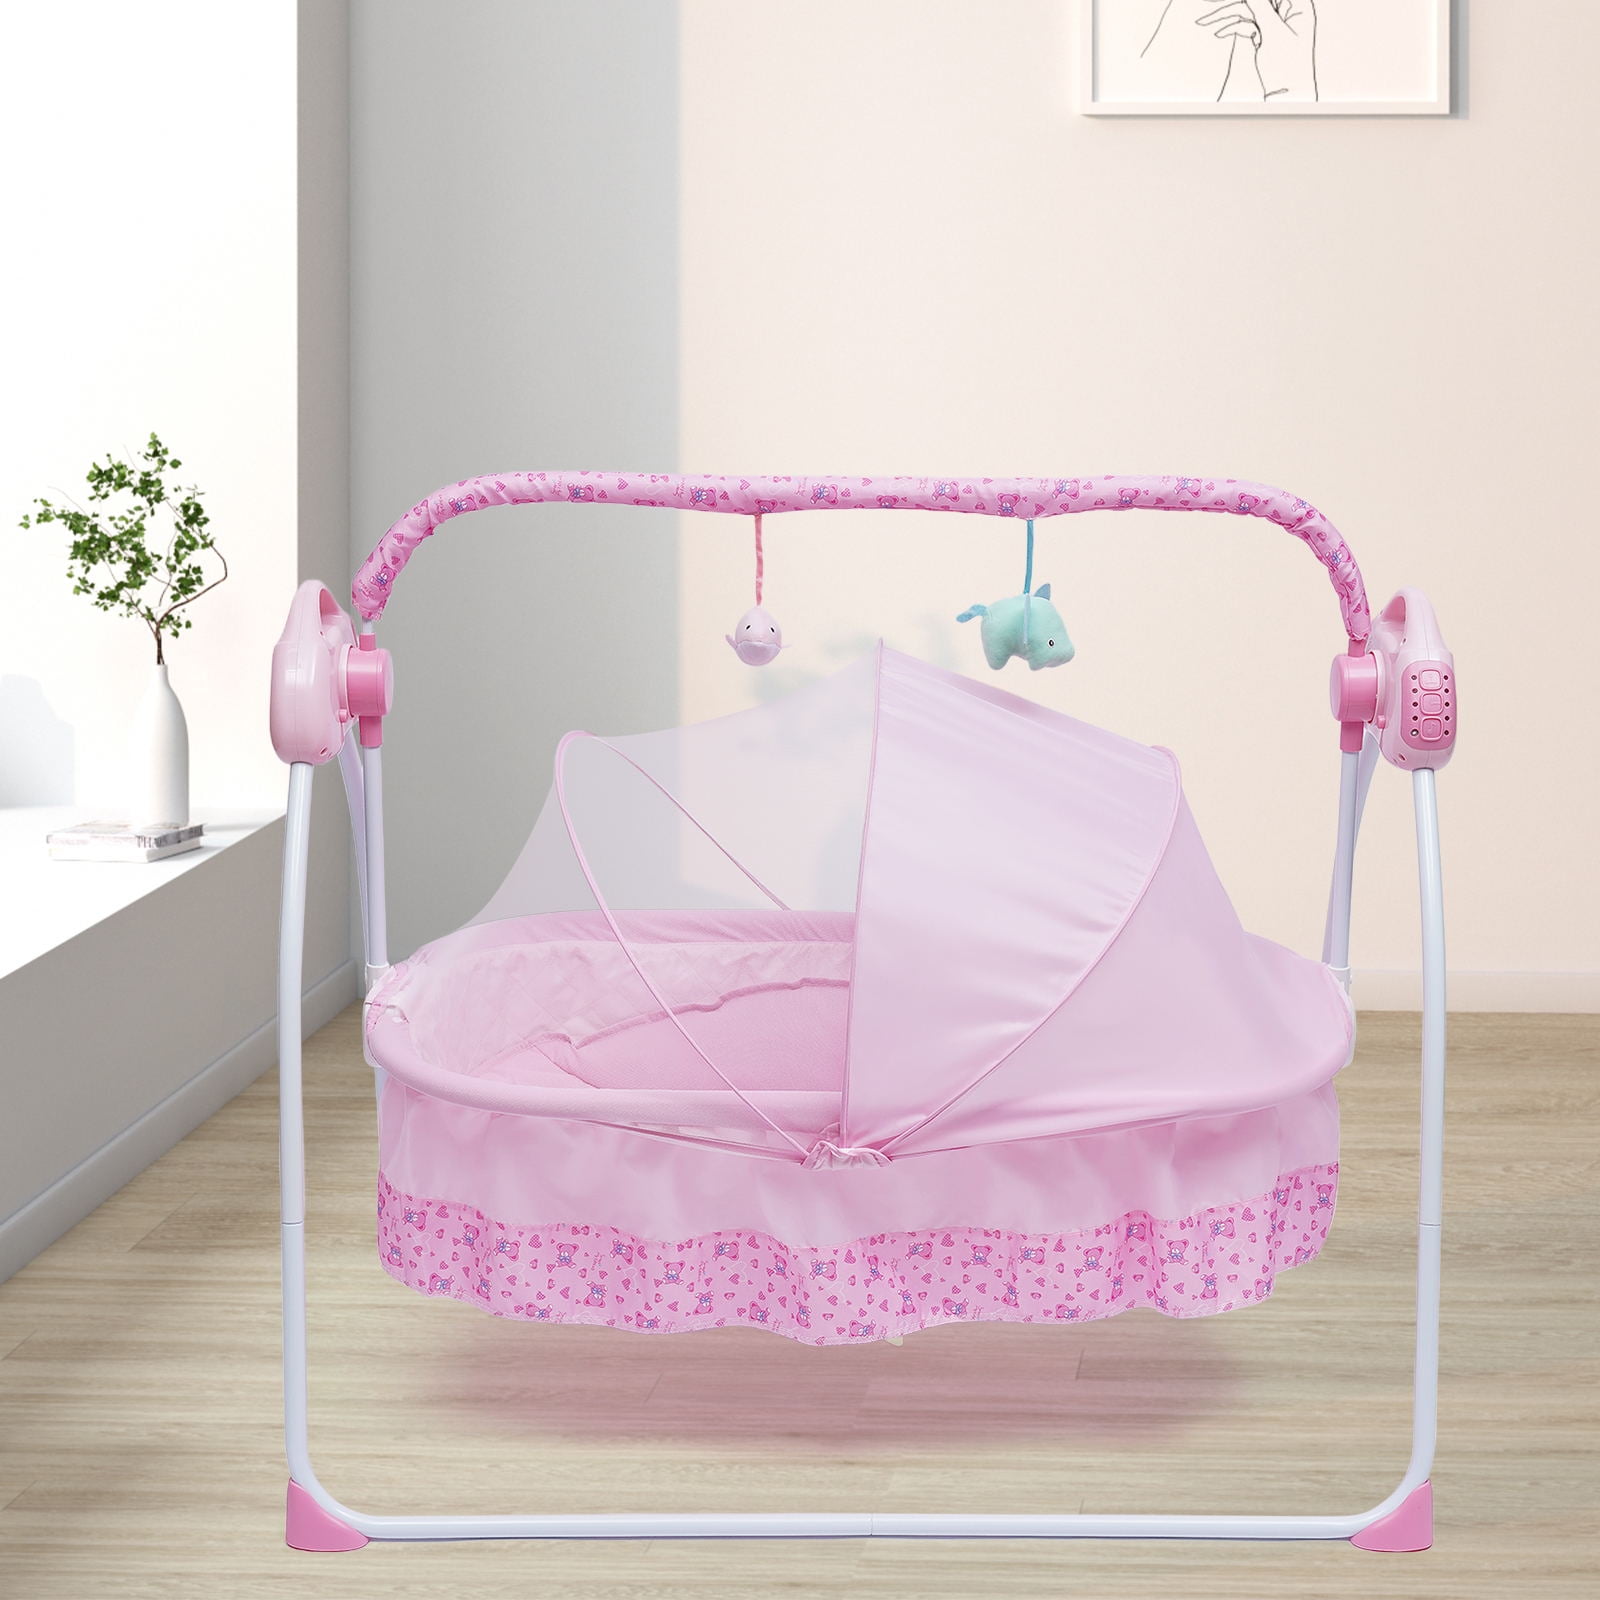 Baby Auto-Swing Bed Bluetooth Electric USB Crib Cradle Infant Rocker Cradle+Mat 